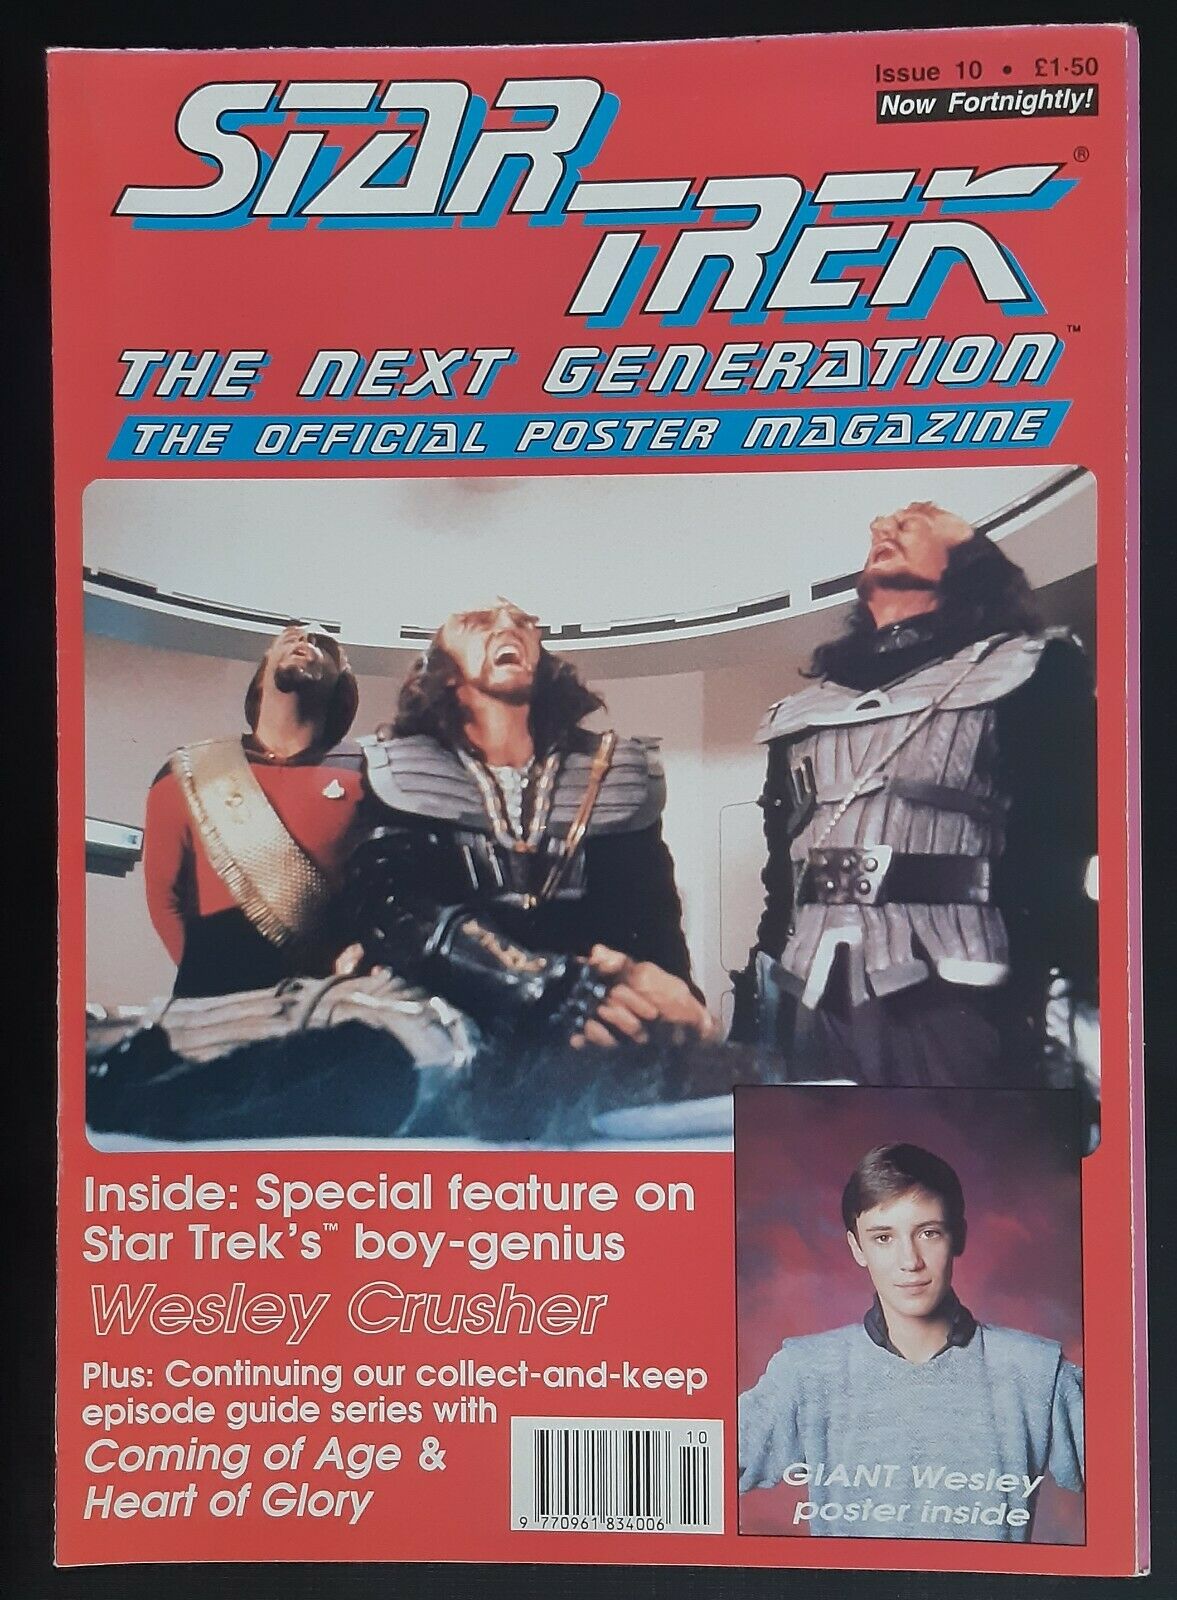 Star Trek: The Next Generation Poster Magazine #10